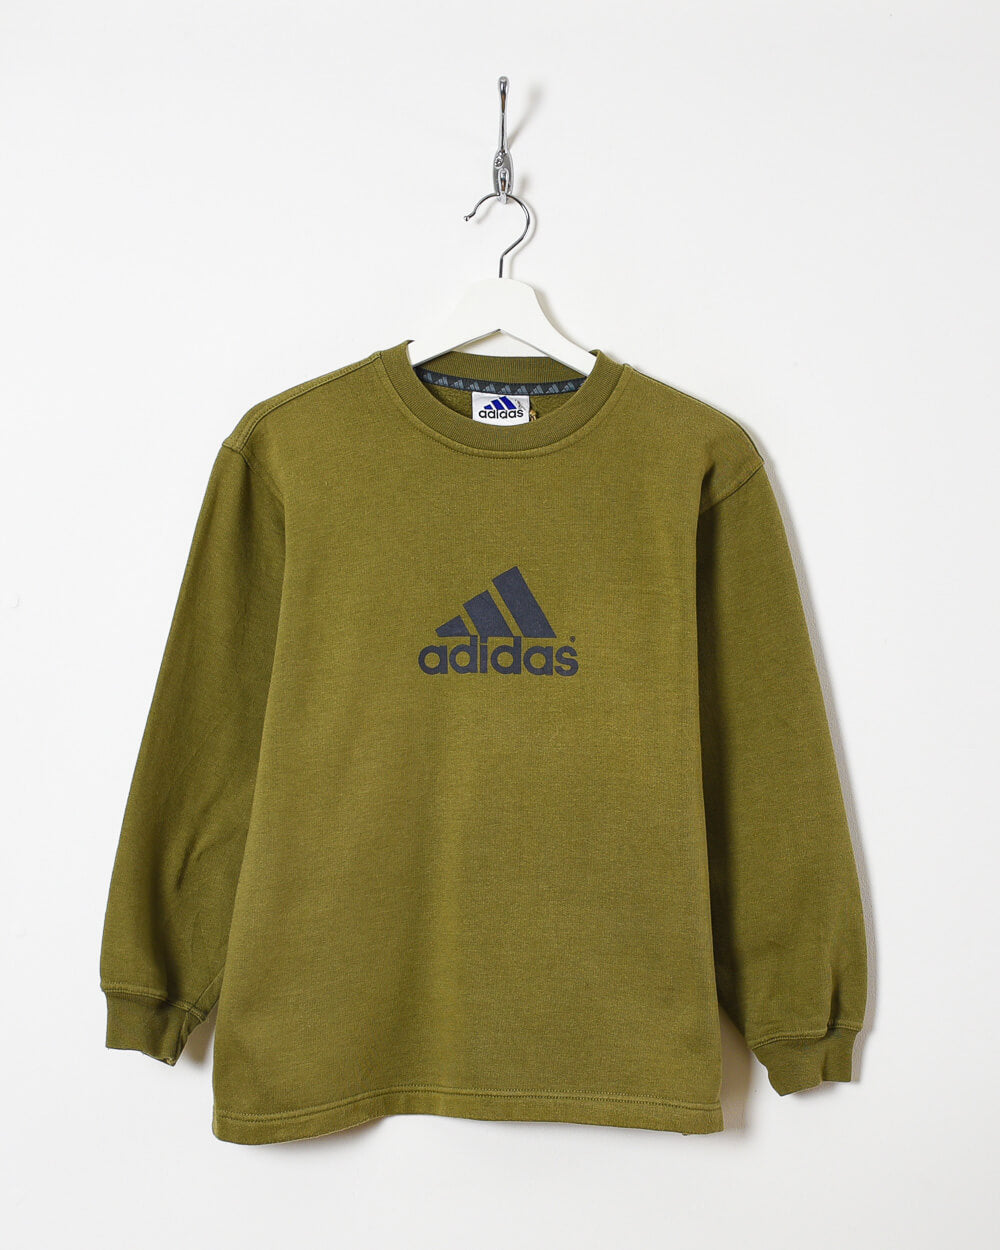 Khaki Adidas Sweatshirt - X-Small